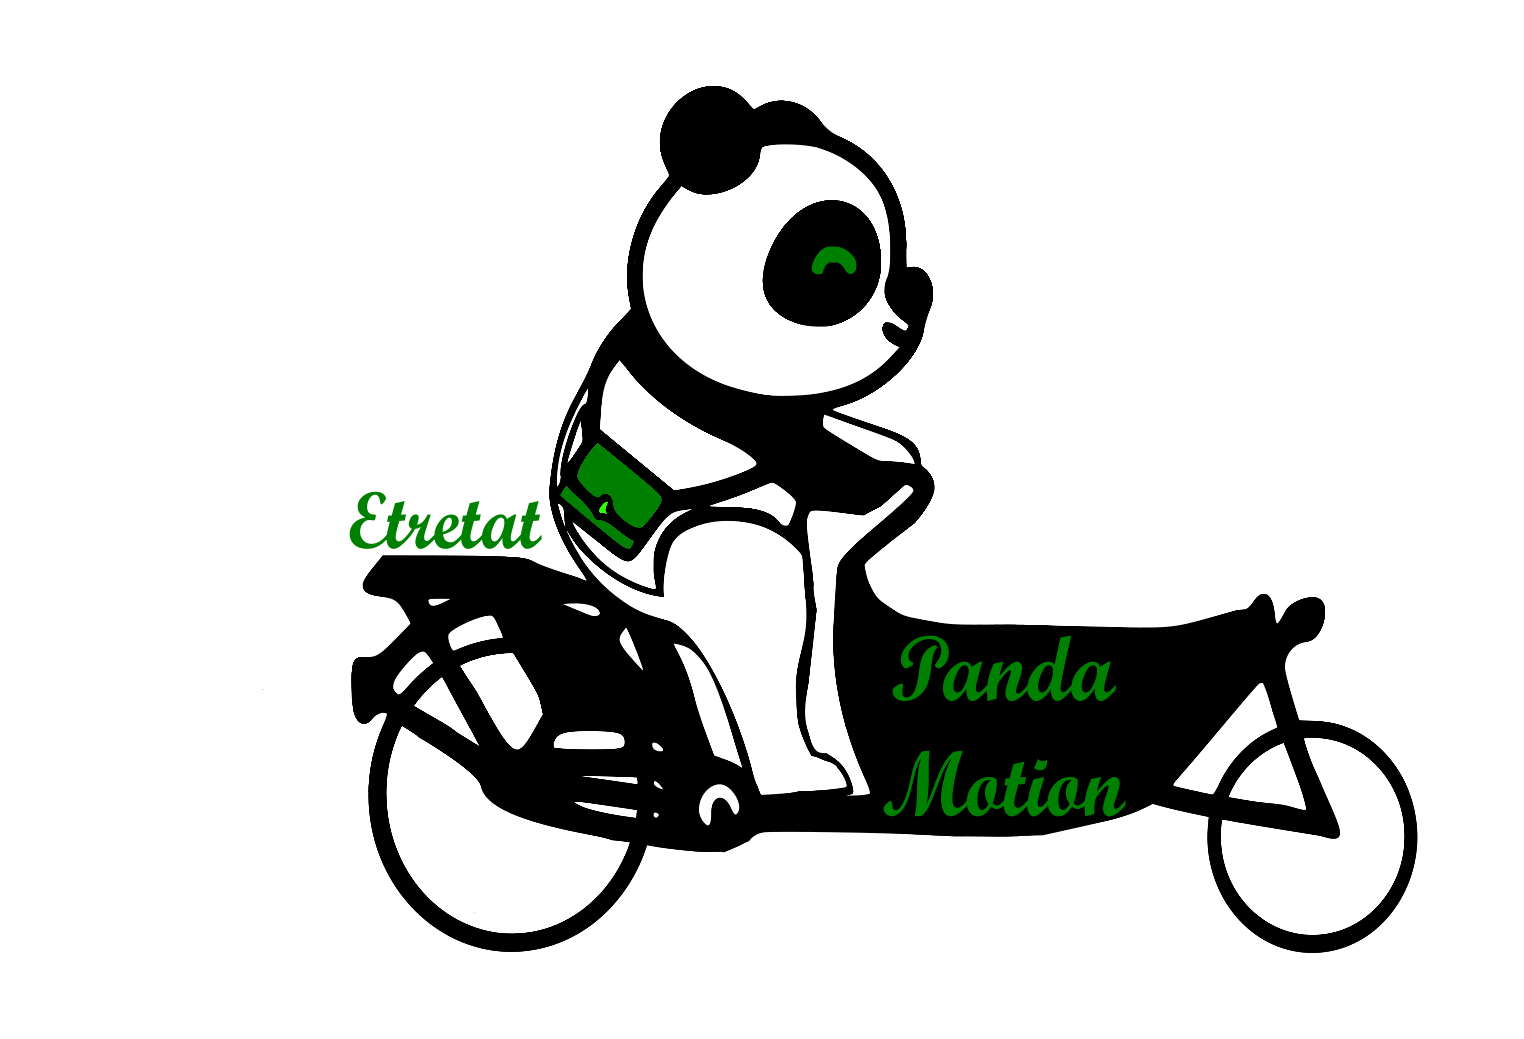 Panda Motion